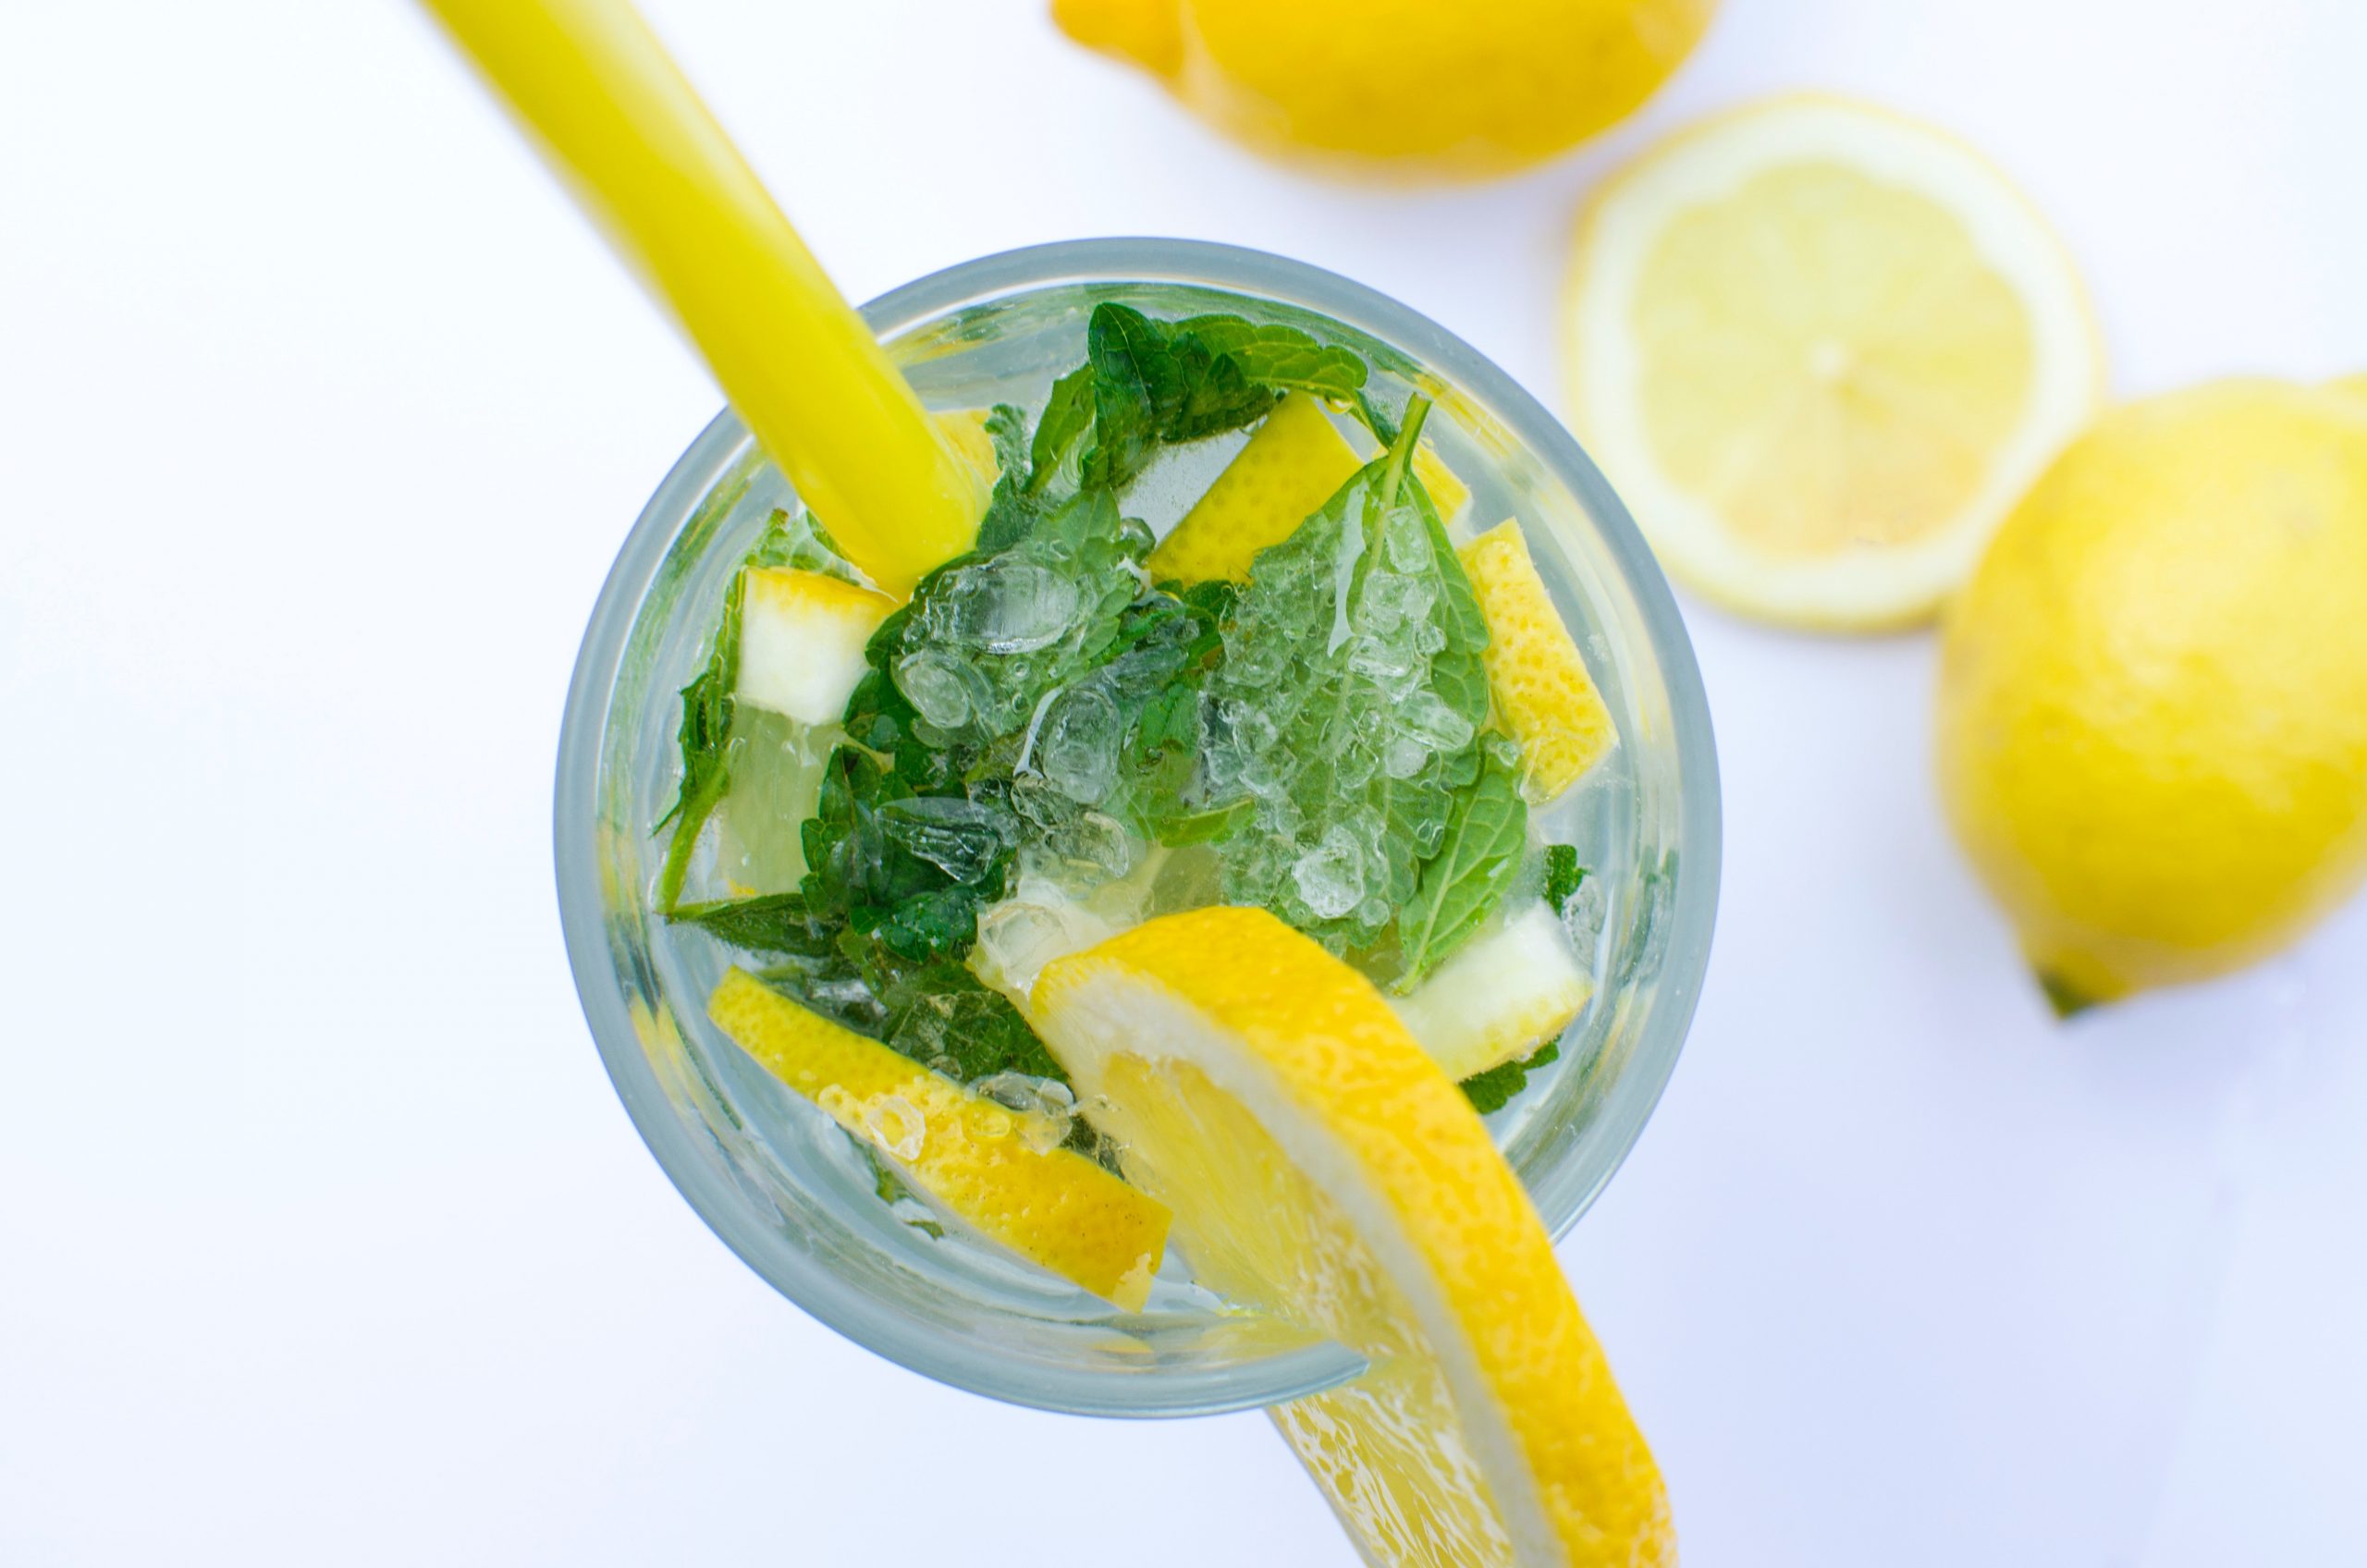 Top view of a lemon juice glass